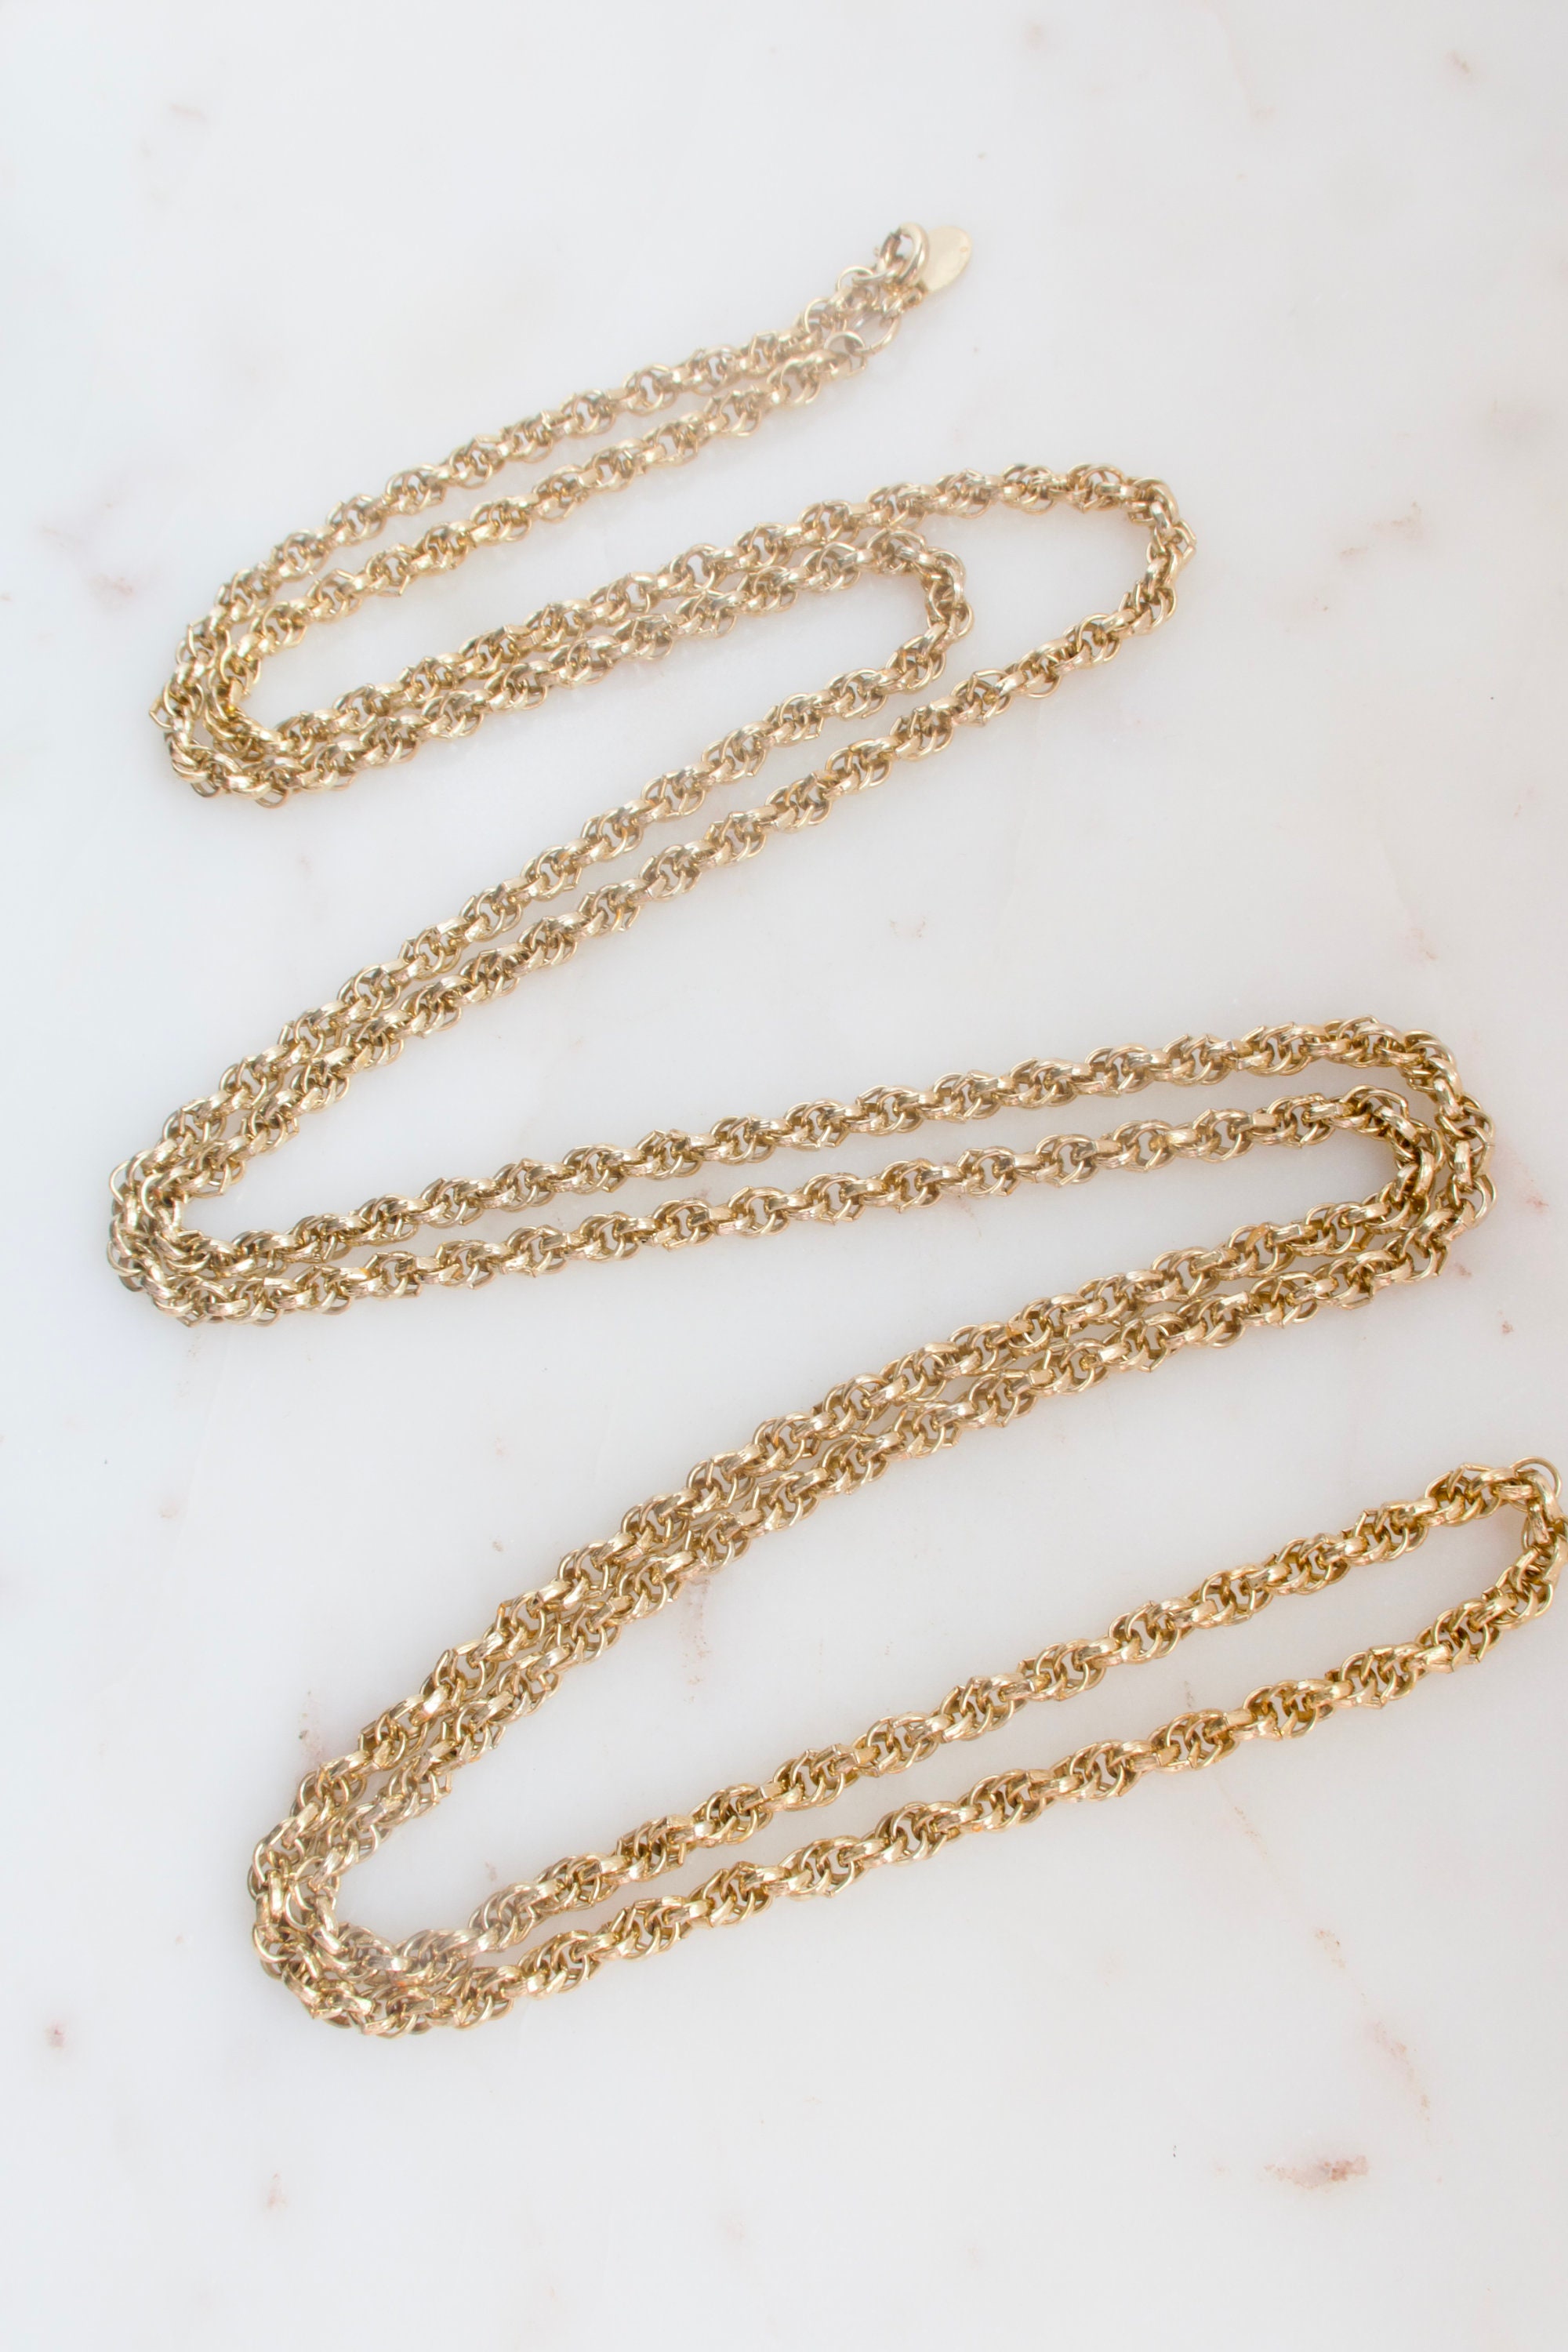 18 Carat Gold Vermeil Twist Chain, Twist Chain Necklace, Decorative Twist  Chain Pendant Necklace in 16, 18, 24 or 30 Inch Chain 